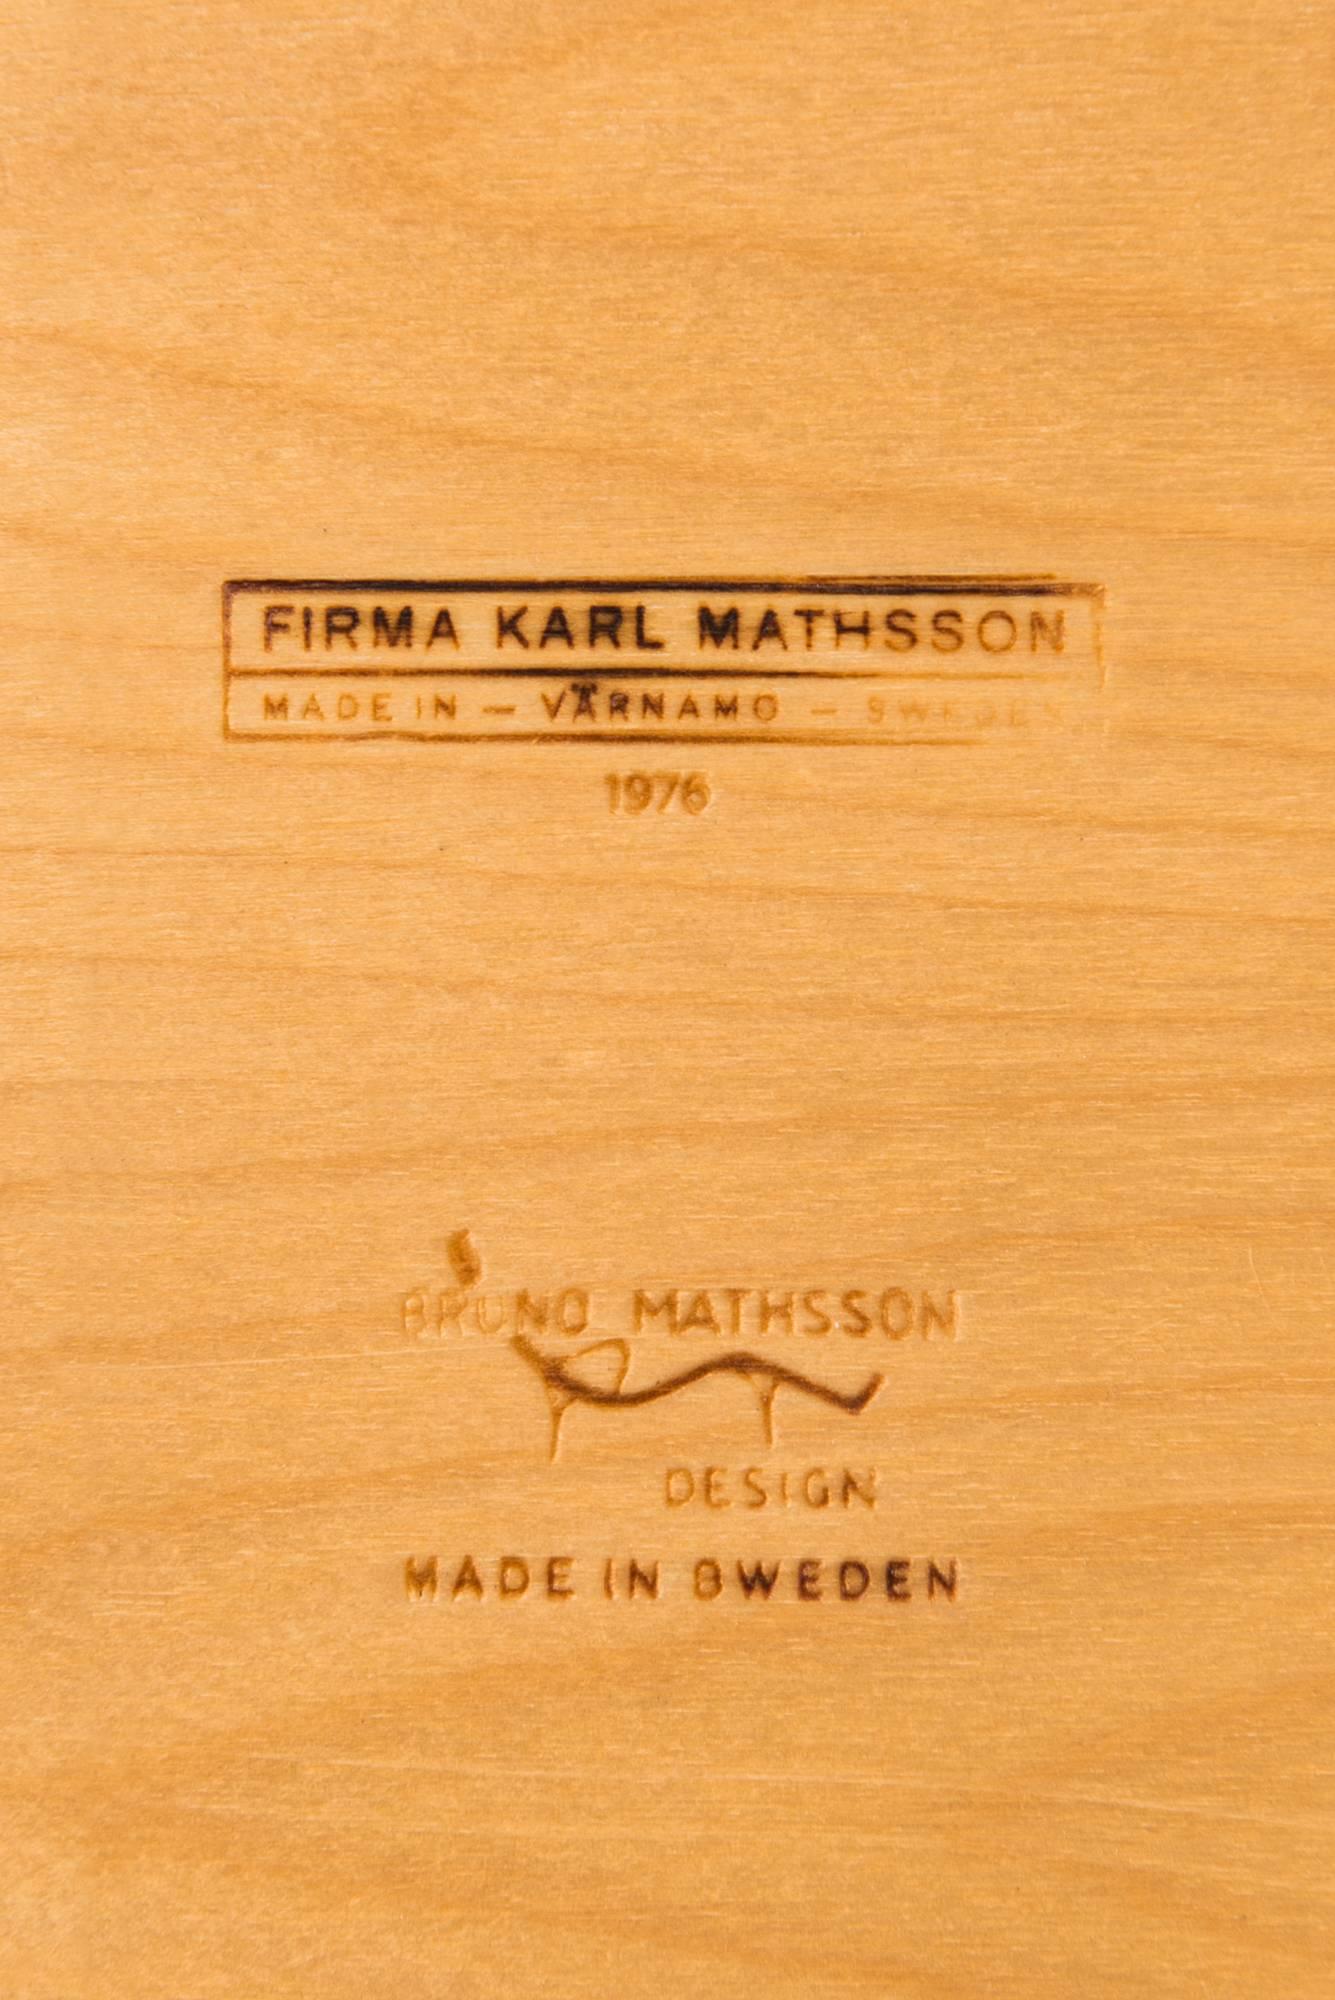 Metal Bruno Mathsson Side Table by Karl Mathsson in Värnamo, Sweden For Sale